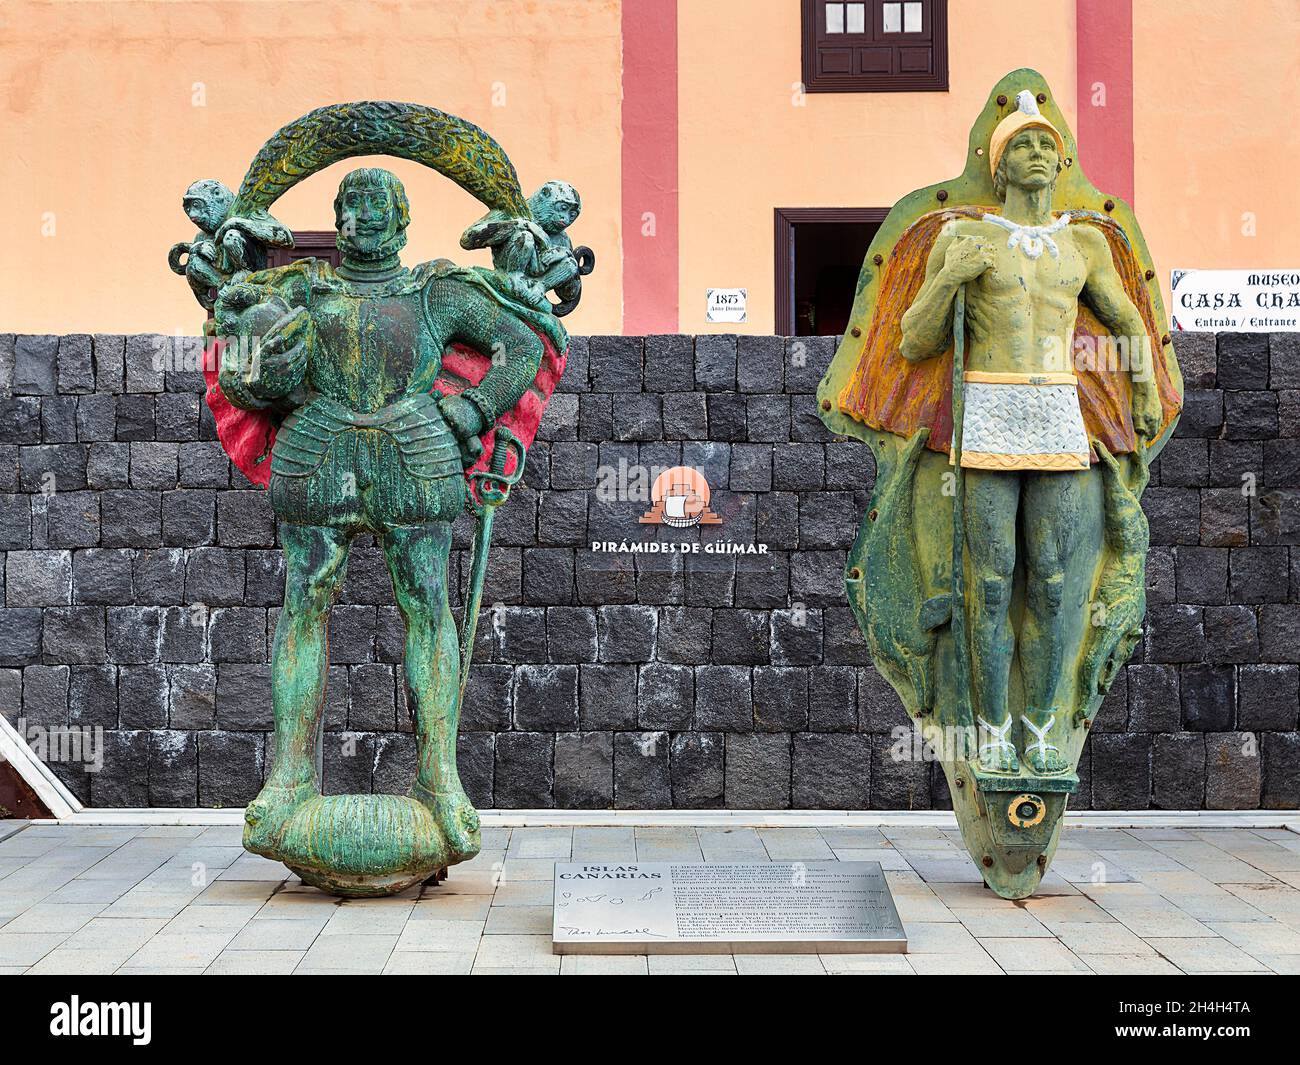 Two sculptures, Discoverer and Conqueror, Ethnographic Park, Piramides de Gueimar, Guimar, Santa Cruz de Tenerife, Tenerife, Spain Stock Photo